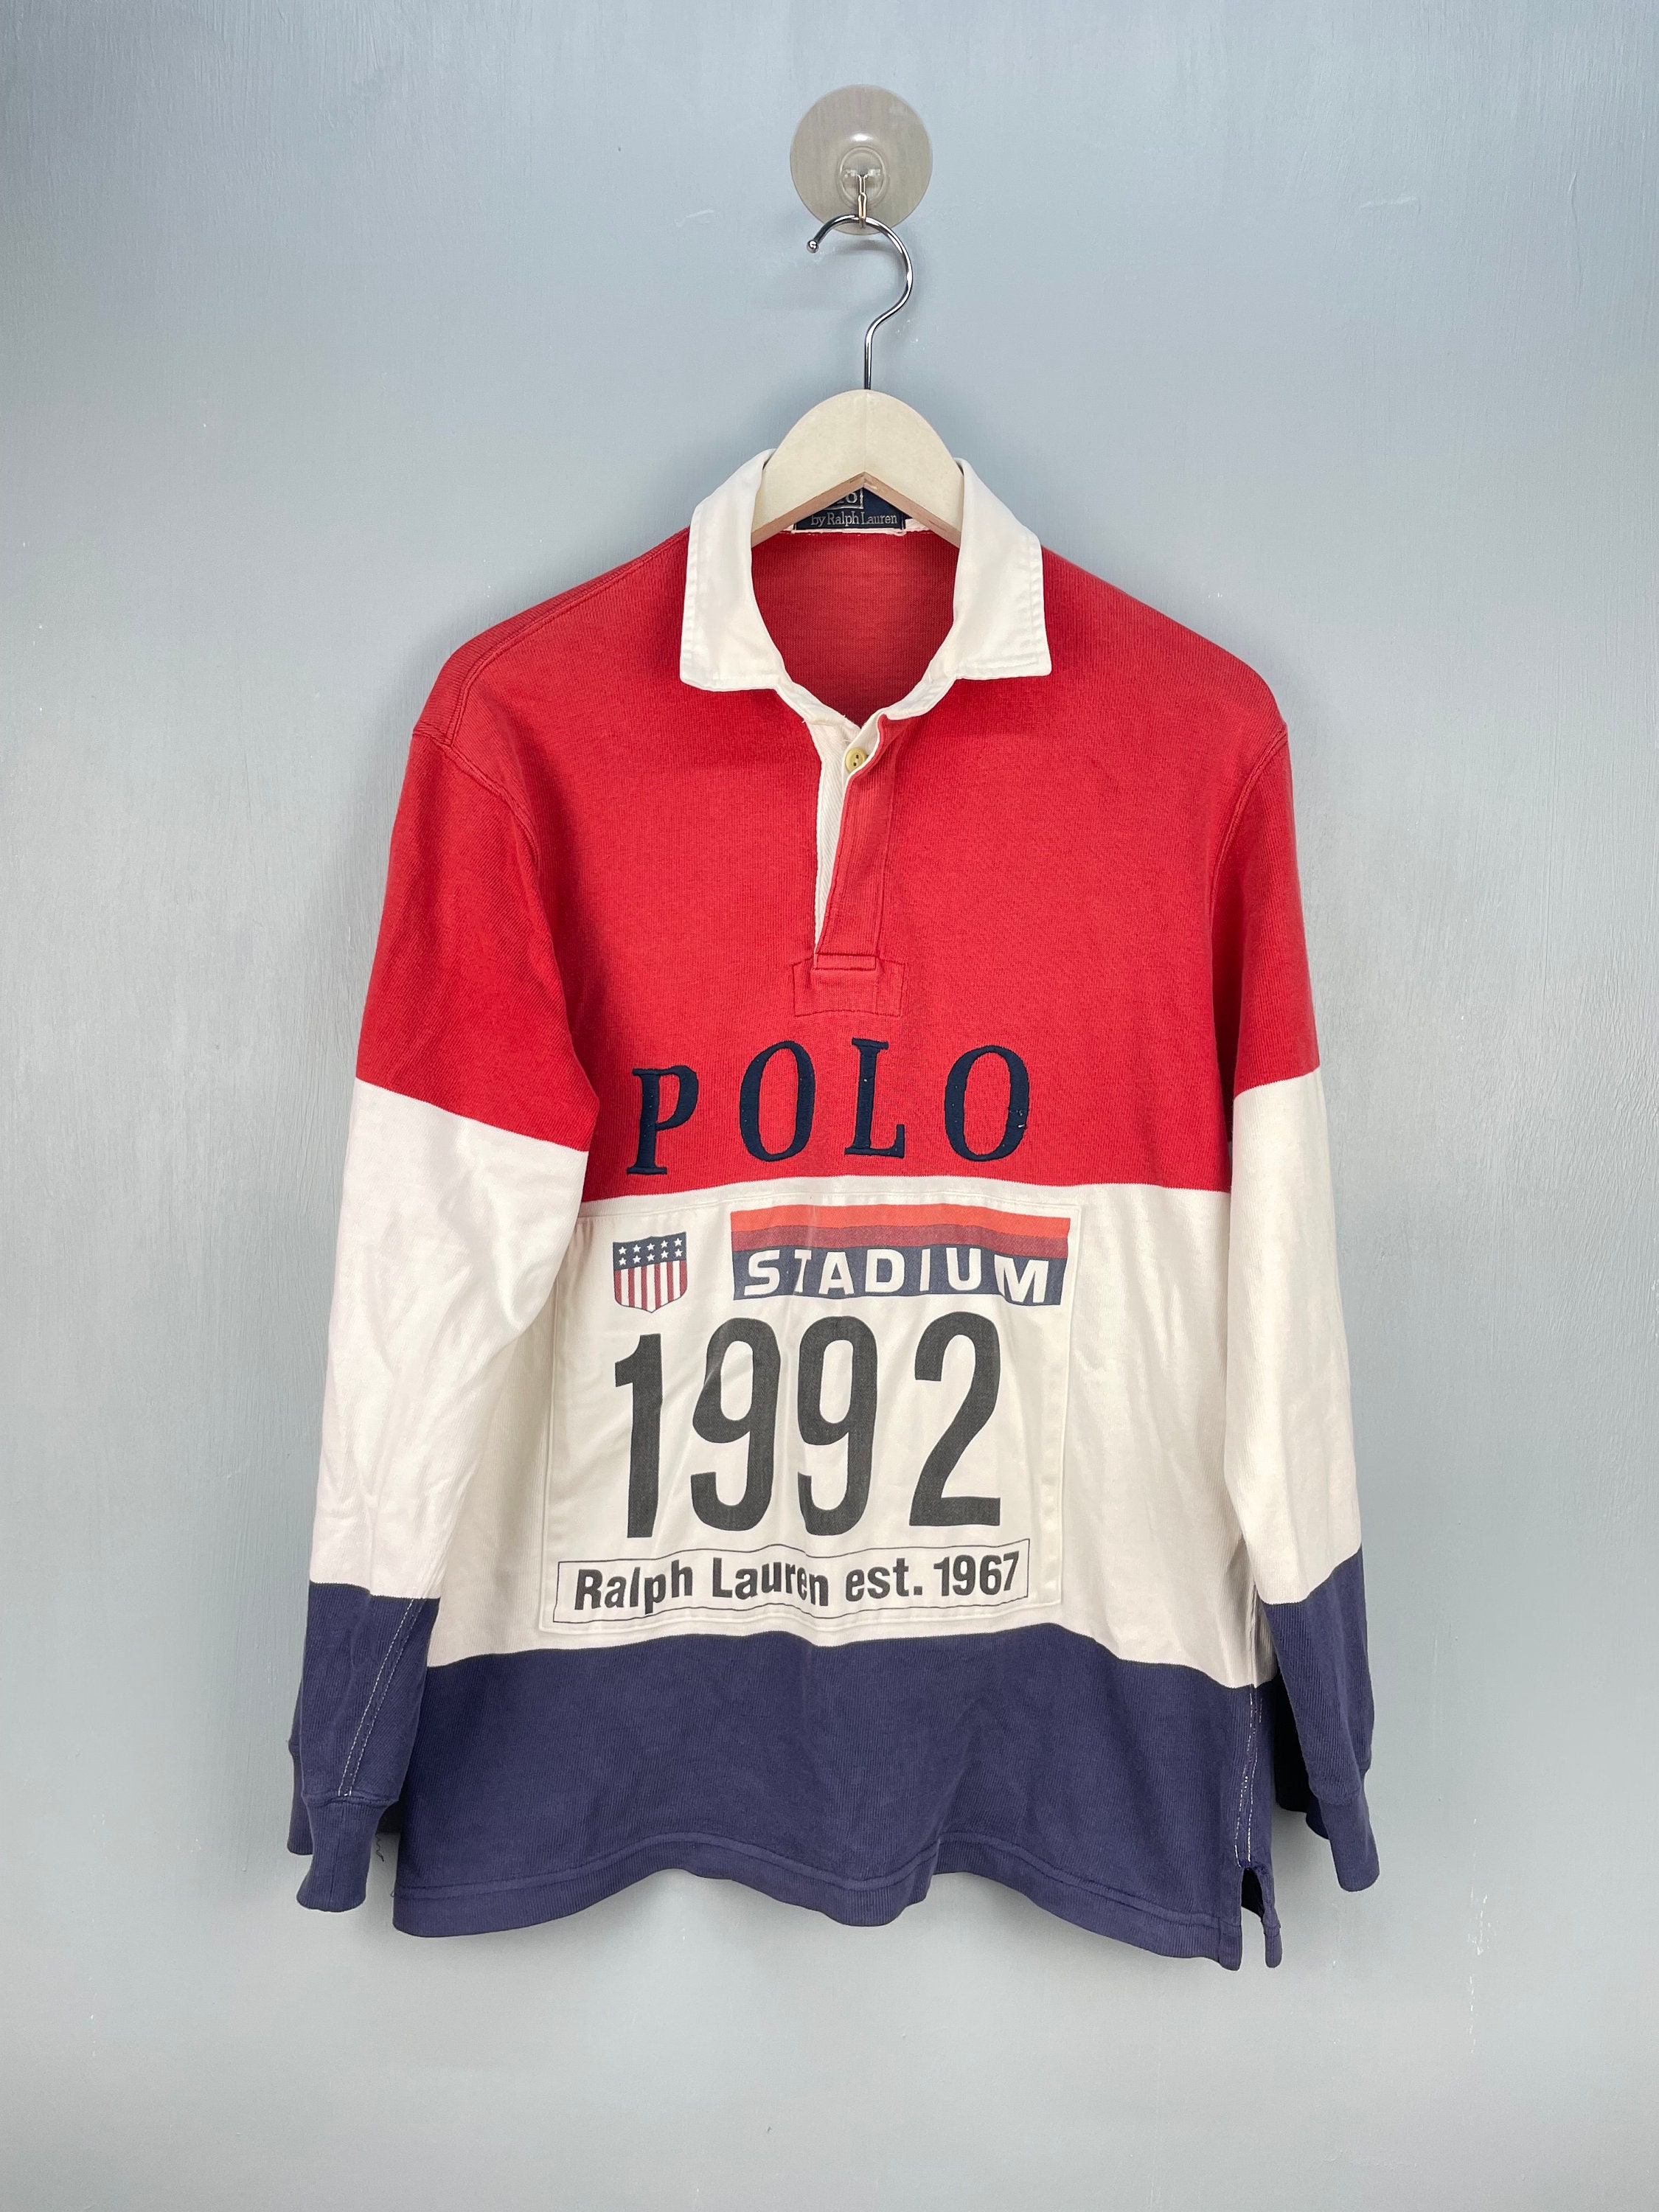 Rare Vintage 90s Polo Stadium 1992 Ralph Lauren polo shirt